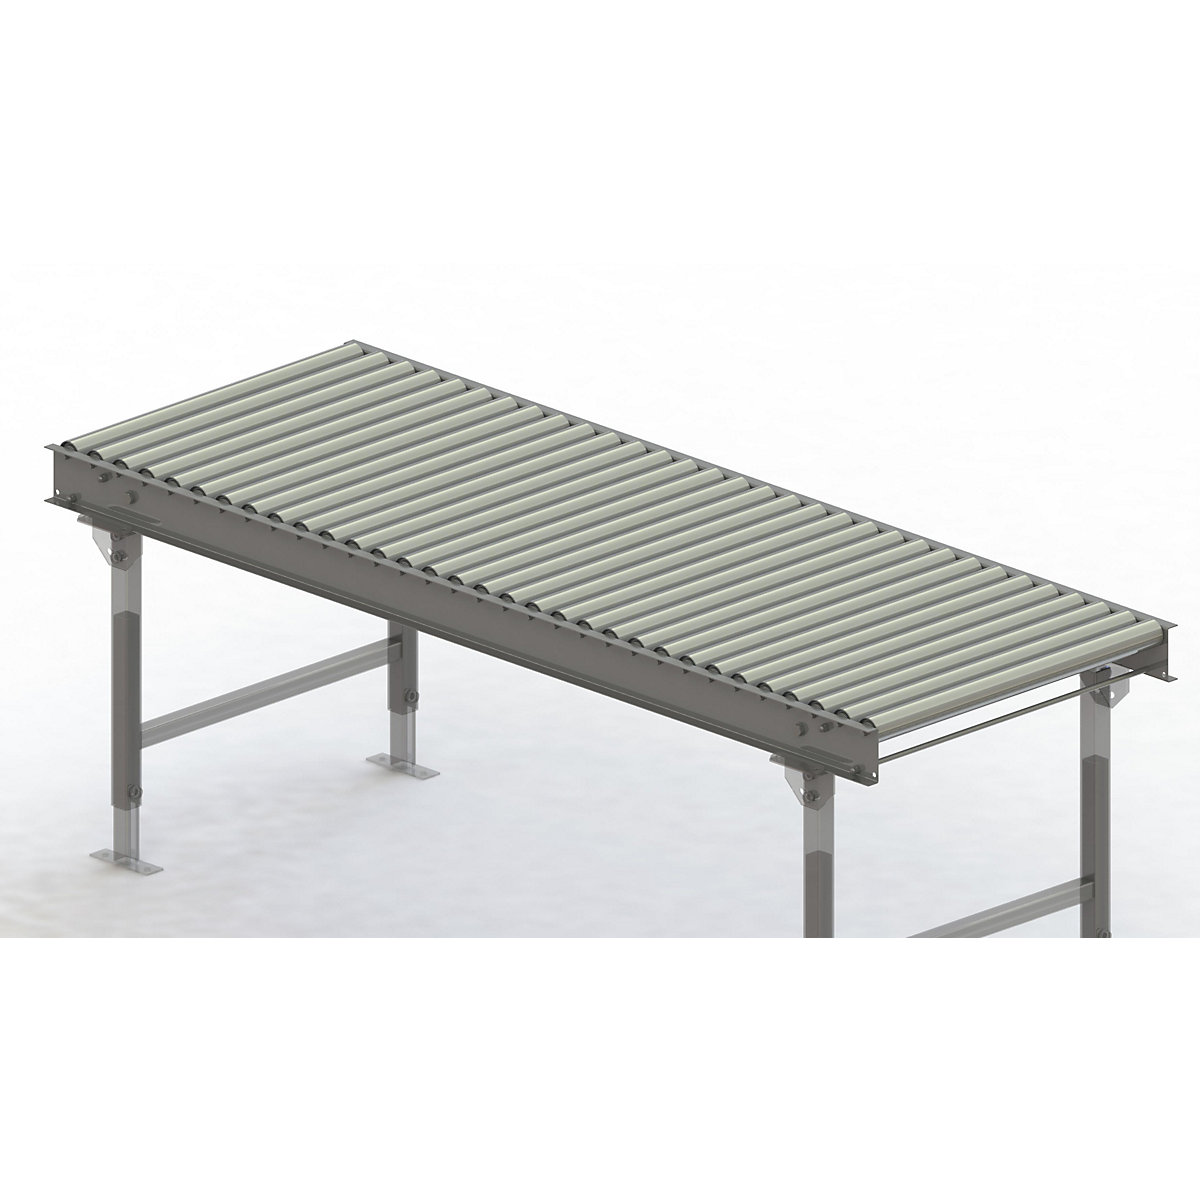 Gura – Roller conveyor, steel frame with zinc plated steel rollers, track width 750 mm, distance between axles 62.5 mm, length 2 m